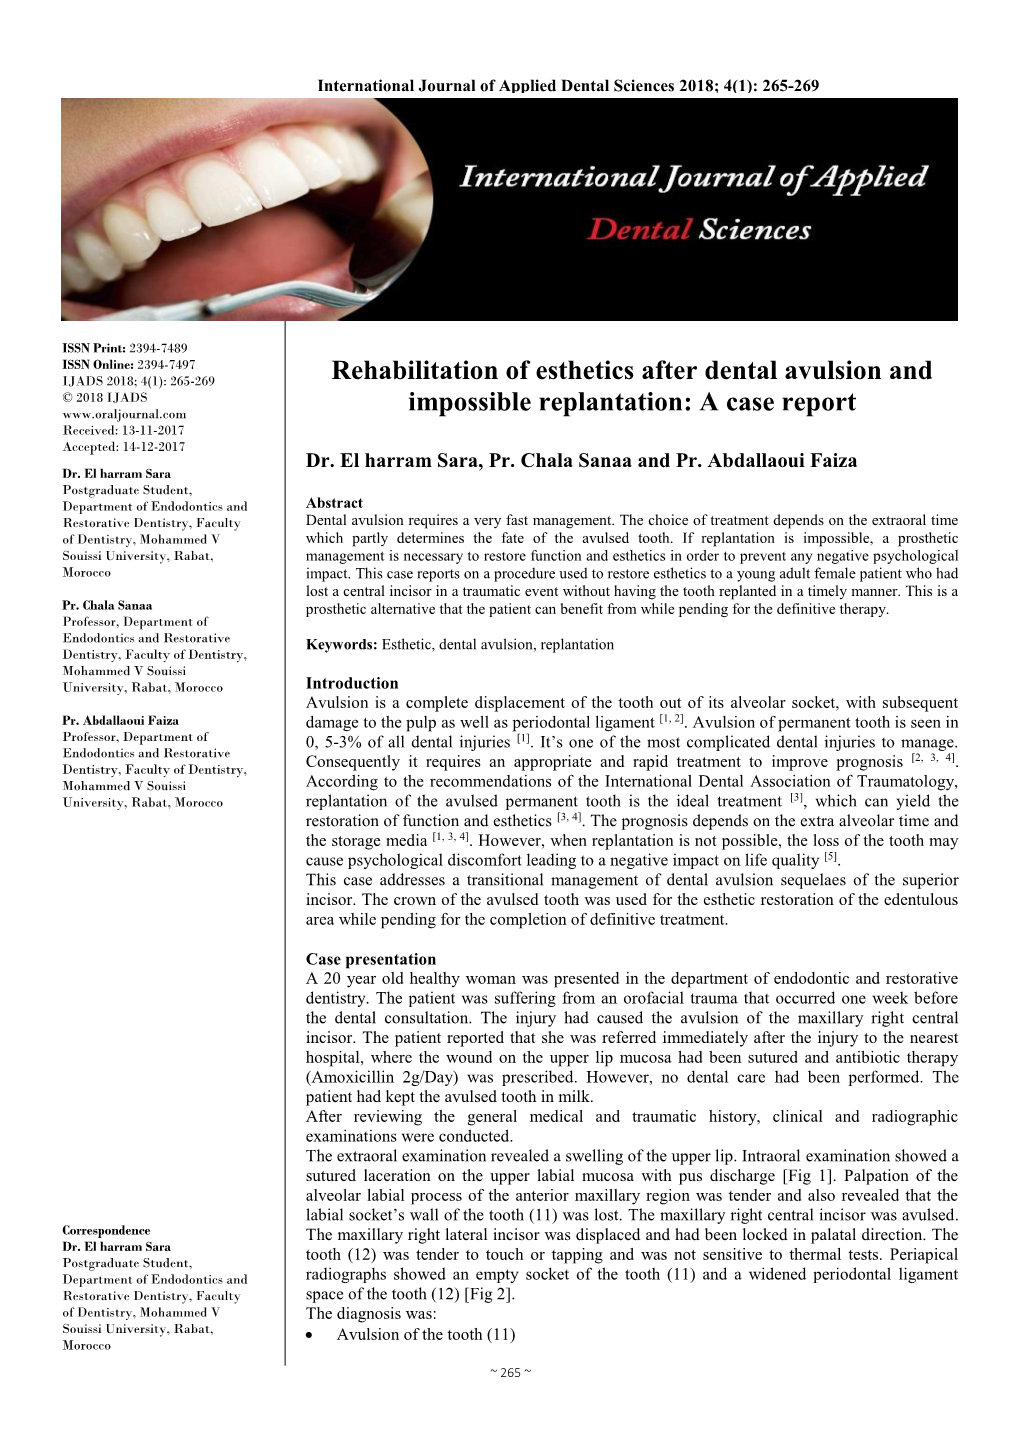 Rehabilitation of Esthetics After Dental Avulsion and Impossible Replantation